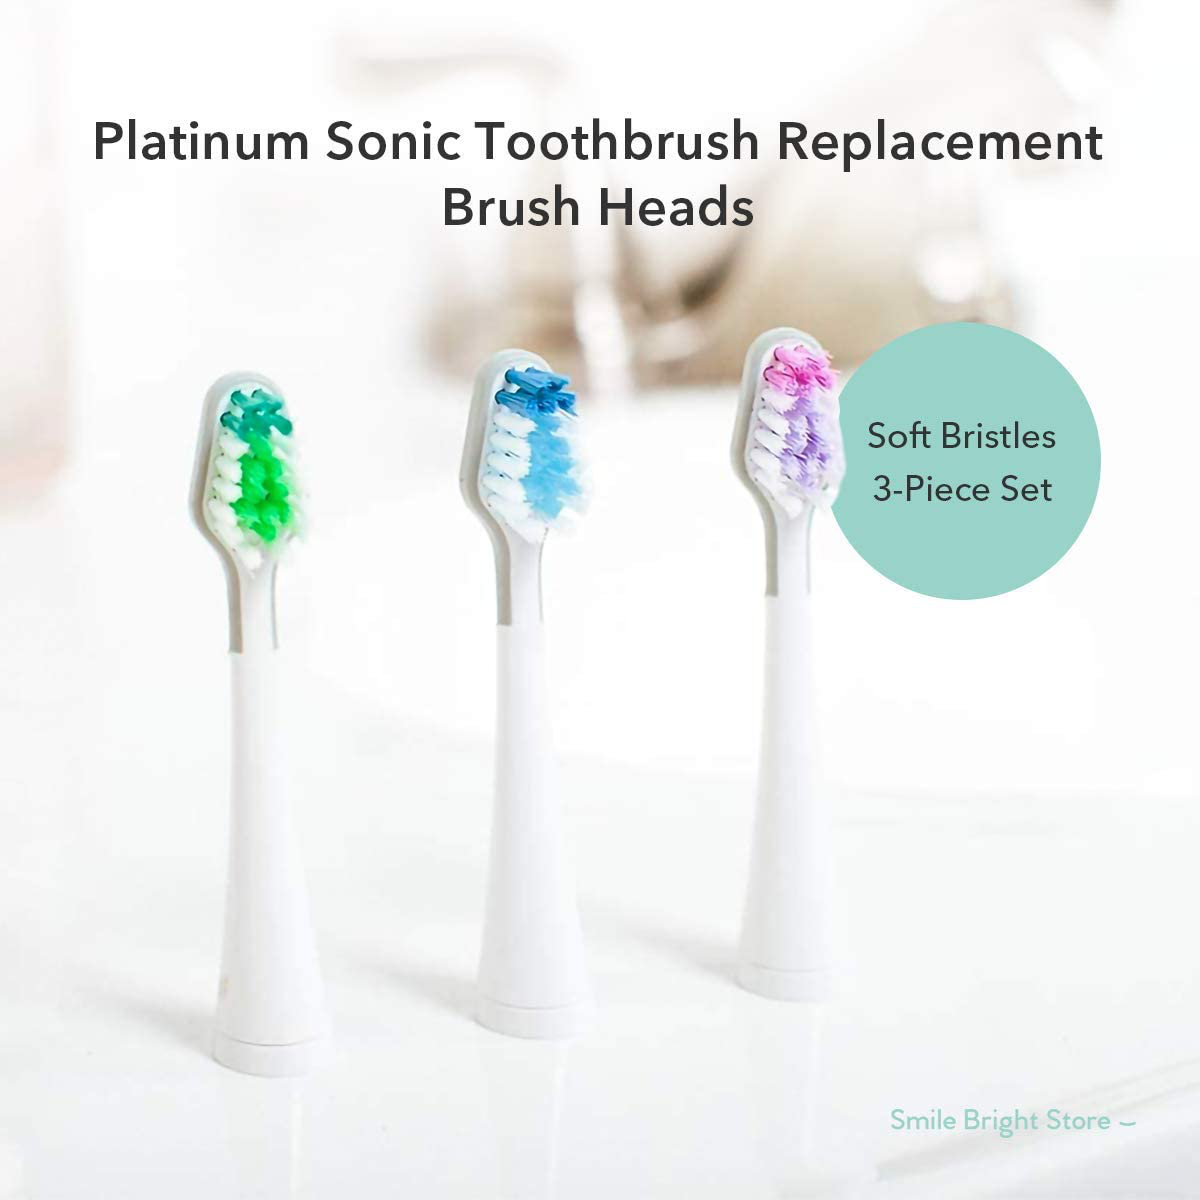 Smile Bright Store Platinum Sonic Toothbrush Replacement Brush Heads - Soft Bristles, Original Version (Pack of 3)